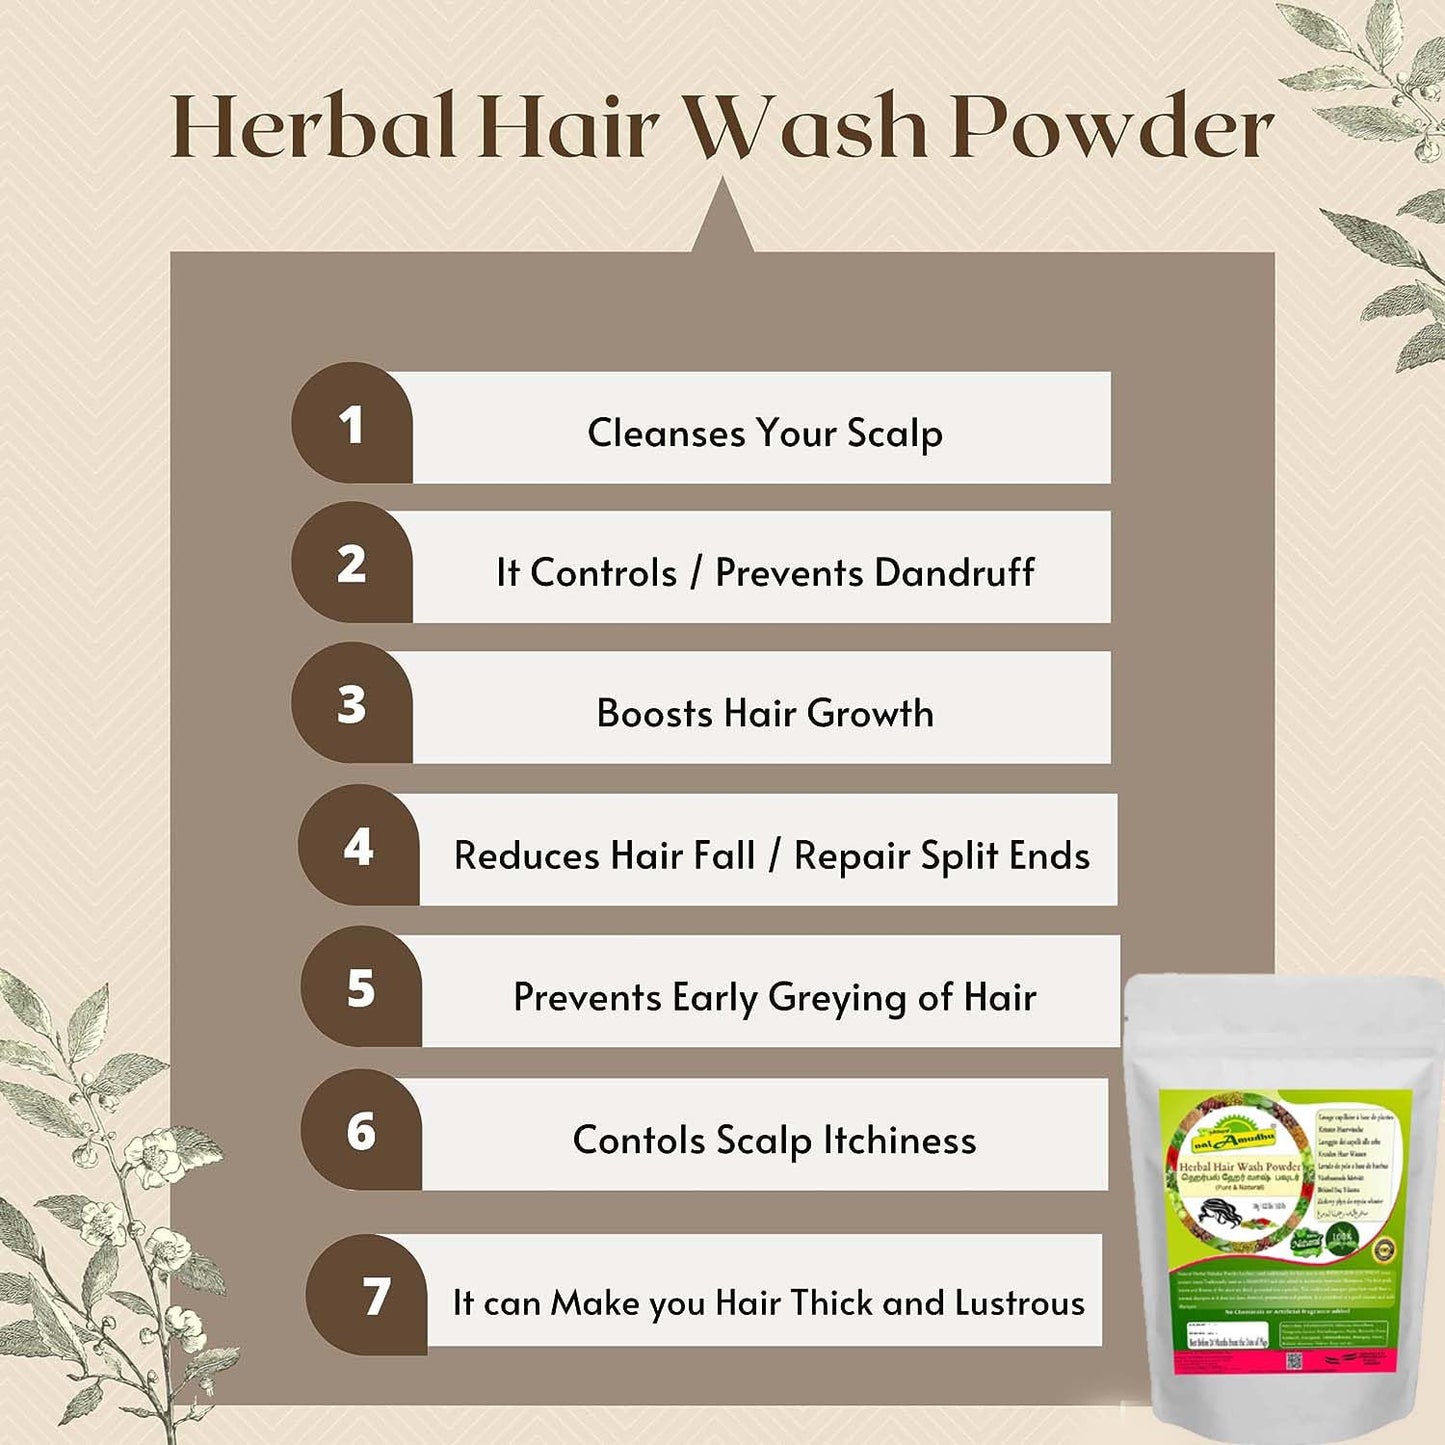 nalAmudhu Herbal Hair Wash and Conditioner Shikakai Powder For Skin and Hair with Hibiscus, Marudhani, Karisalanganni, Fenugreek, Lemon, Amla, Keelanelli, Adhimadhuram 100g